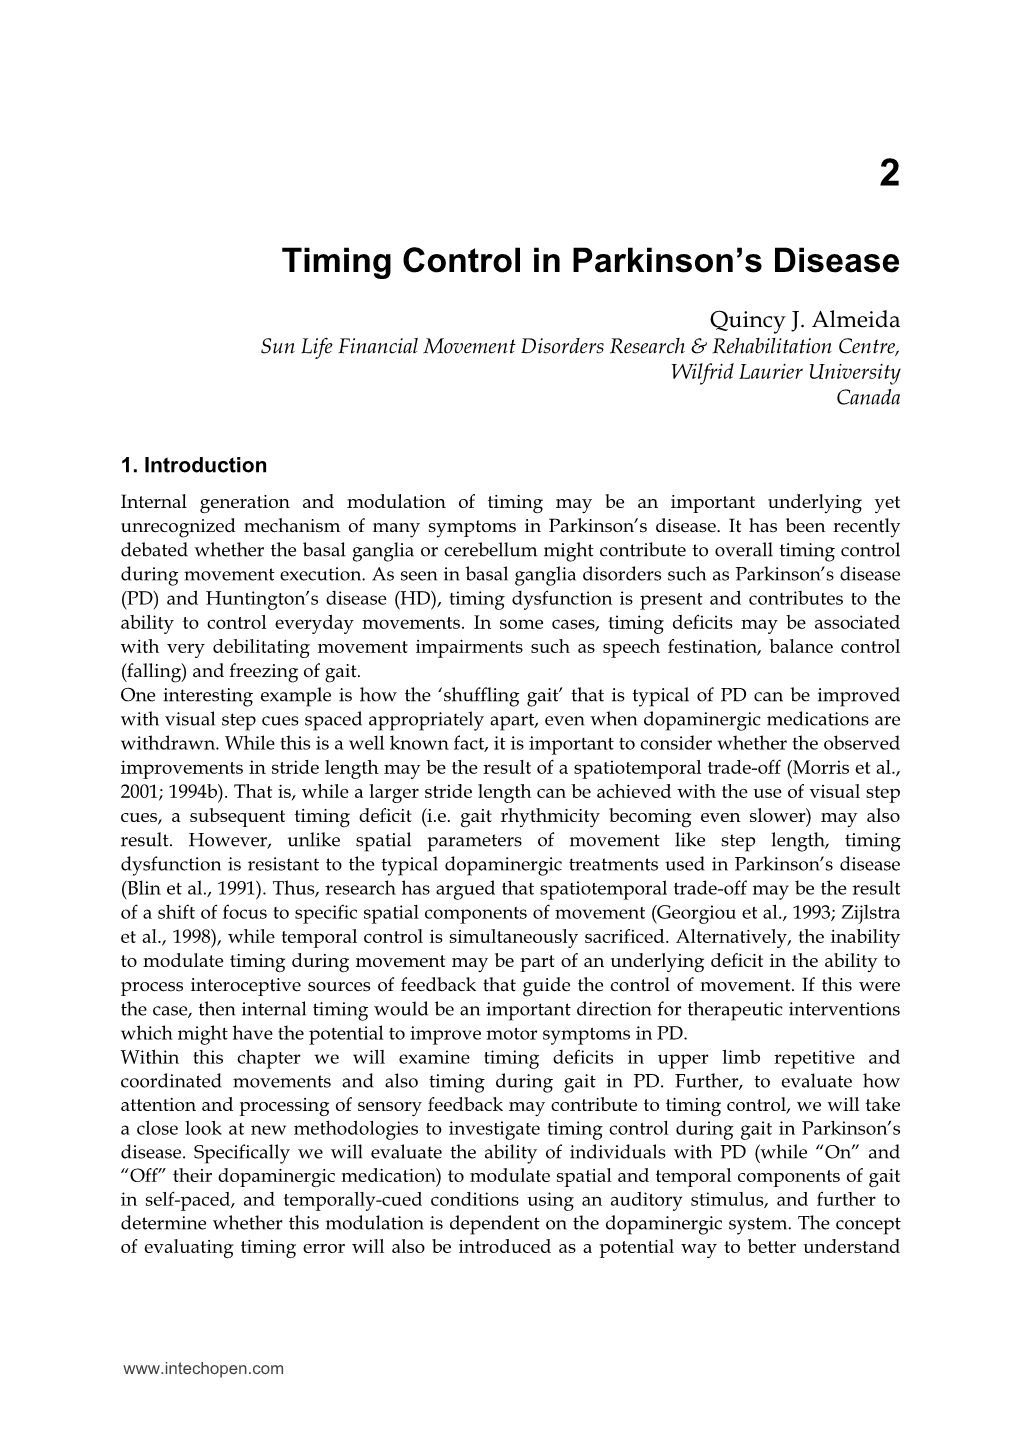 Timing Control in Parkinson's Disease